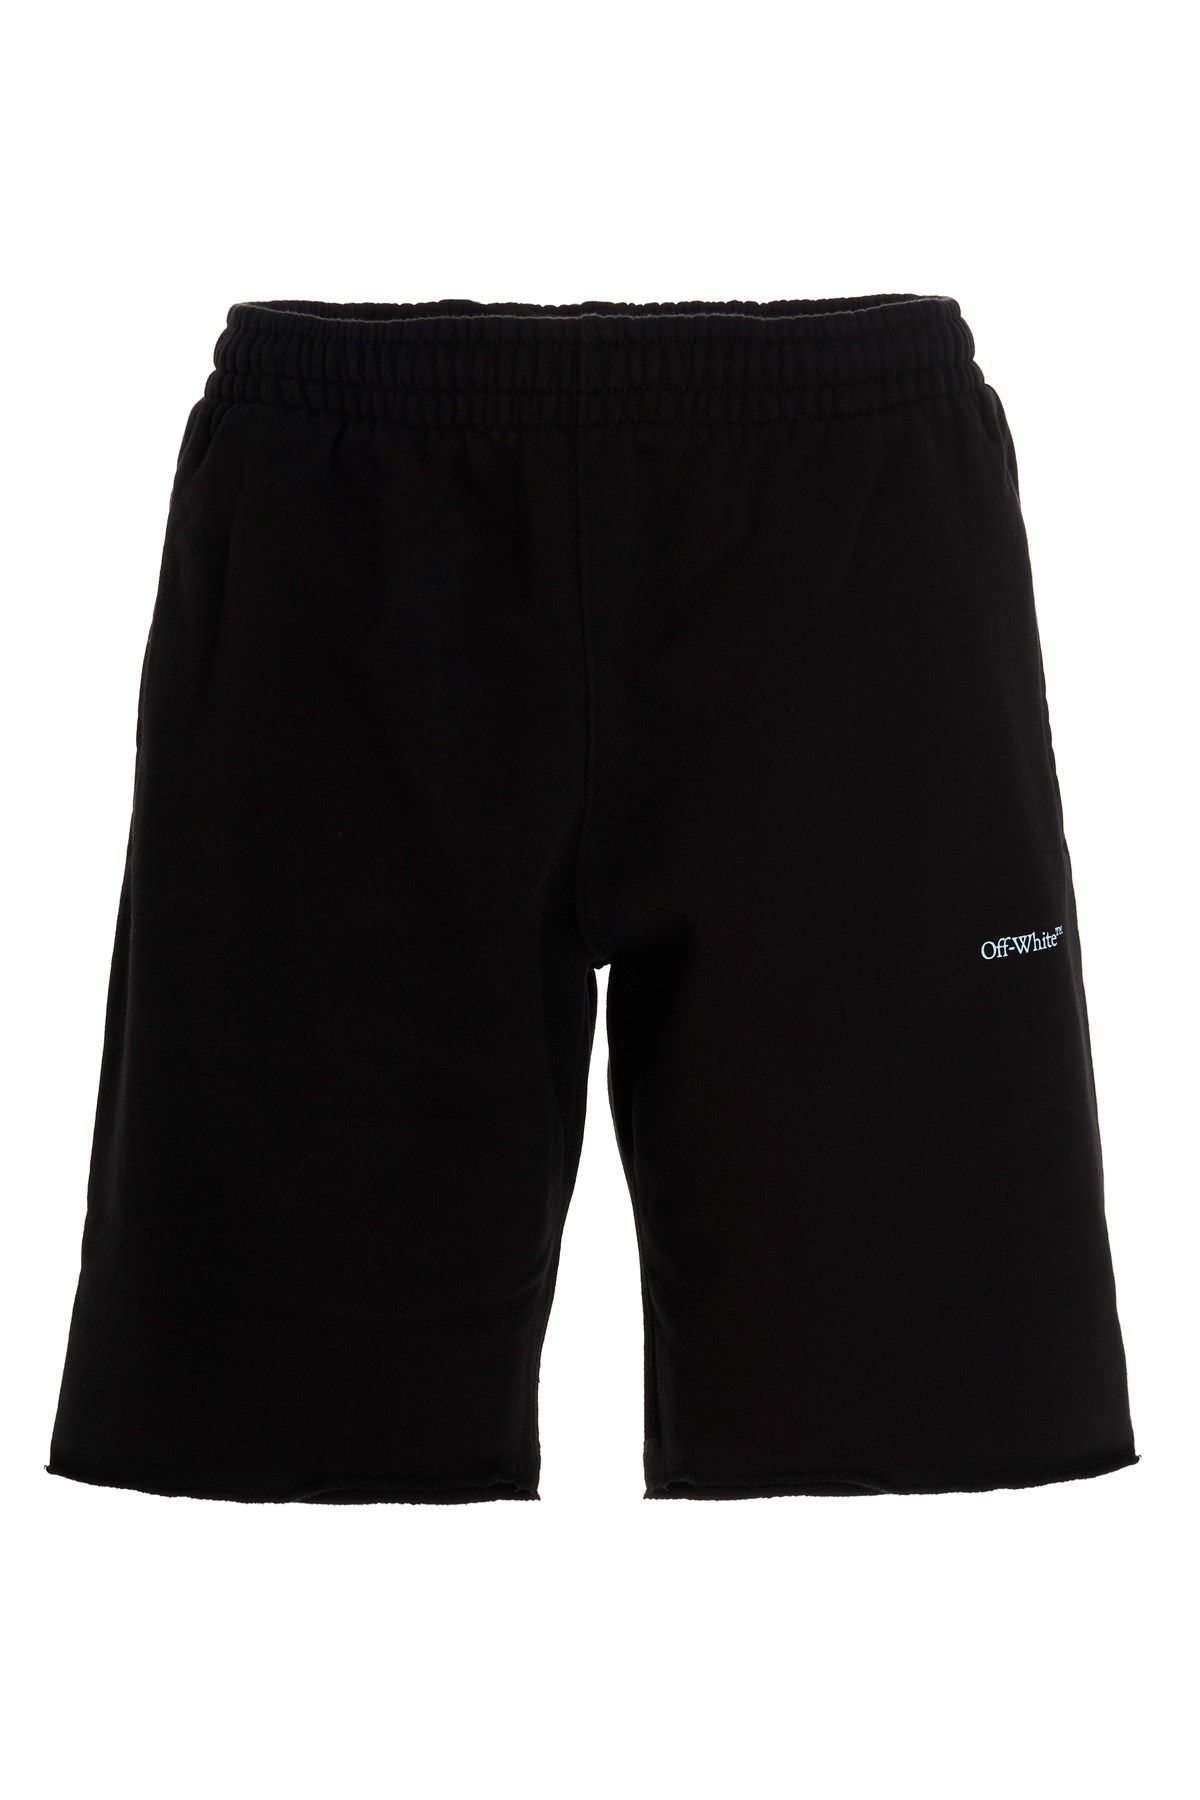 OFF-WHITE 'Marker’ Bermuda Shorts